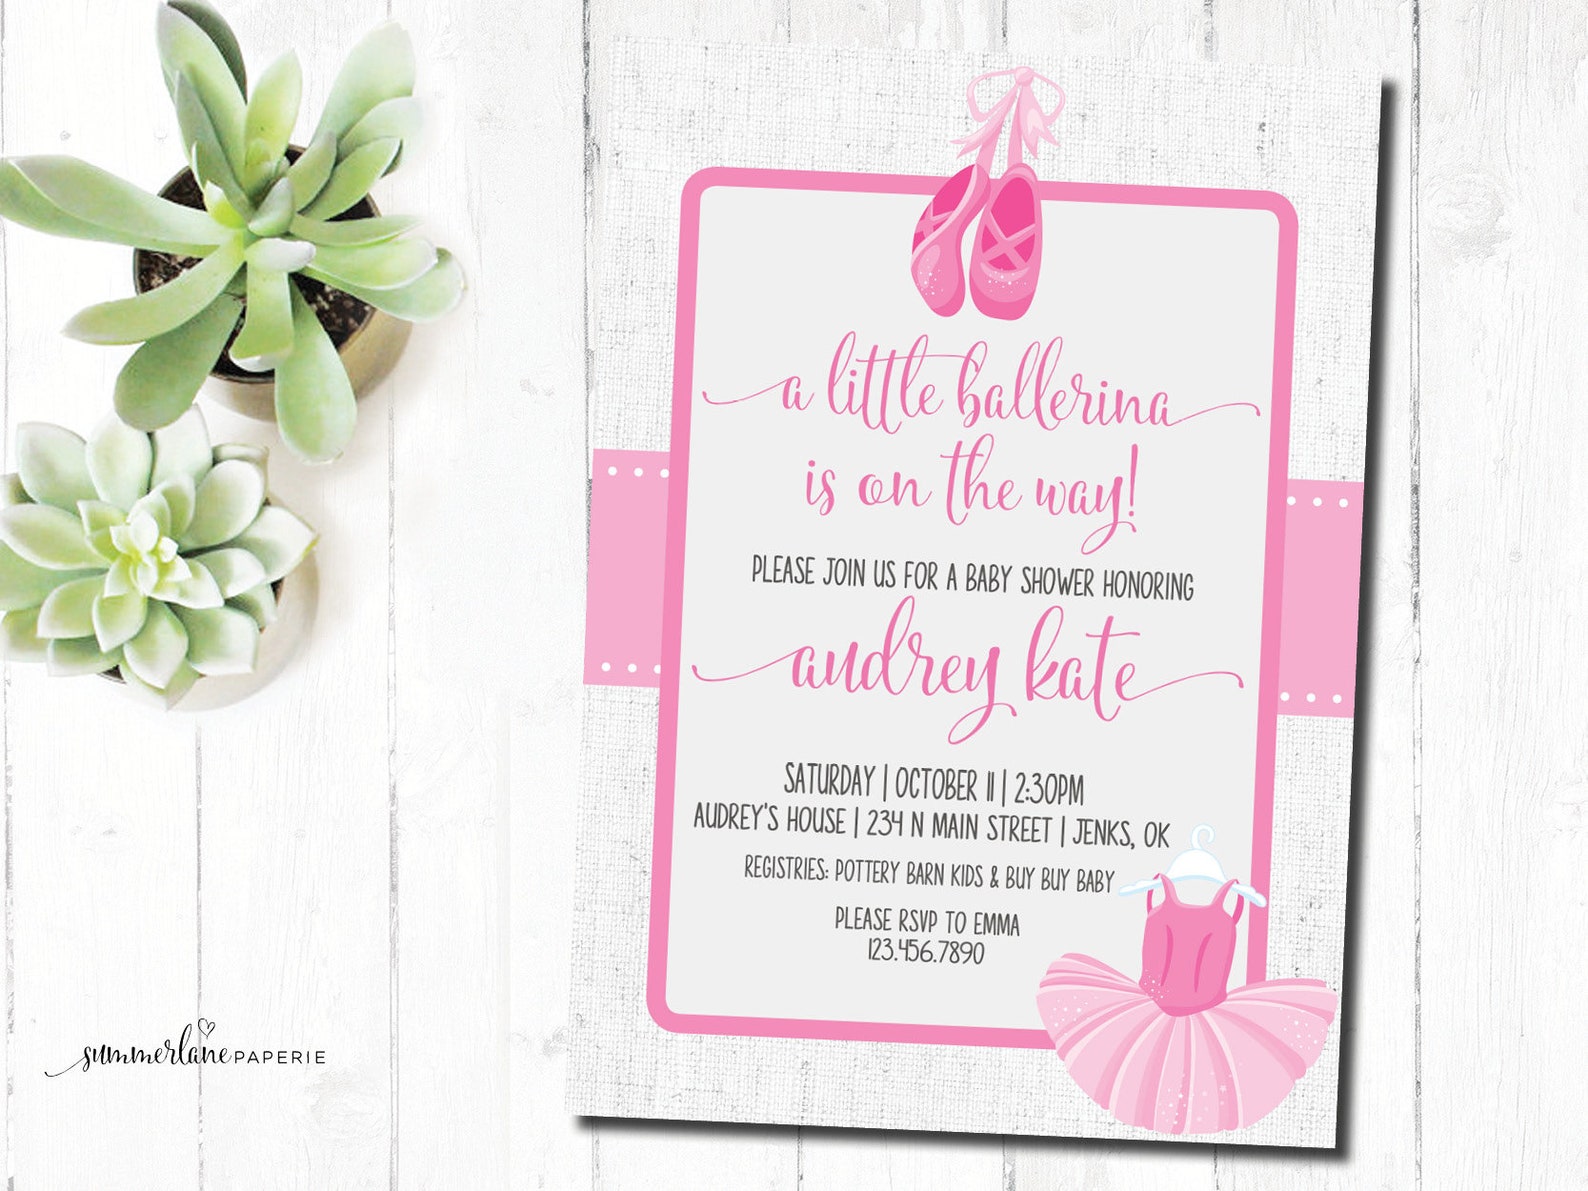 little ballerina baby shower invitations | pink tutu and ballet shoes girl baby shower | classy light pink ballet shower printab